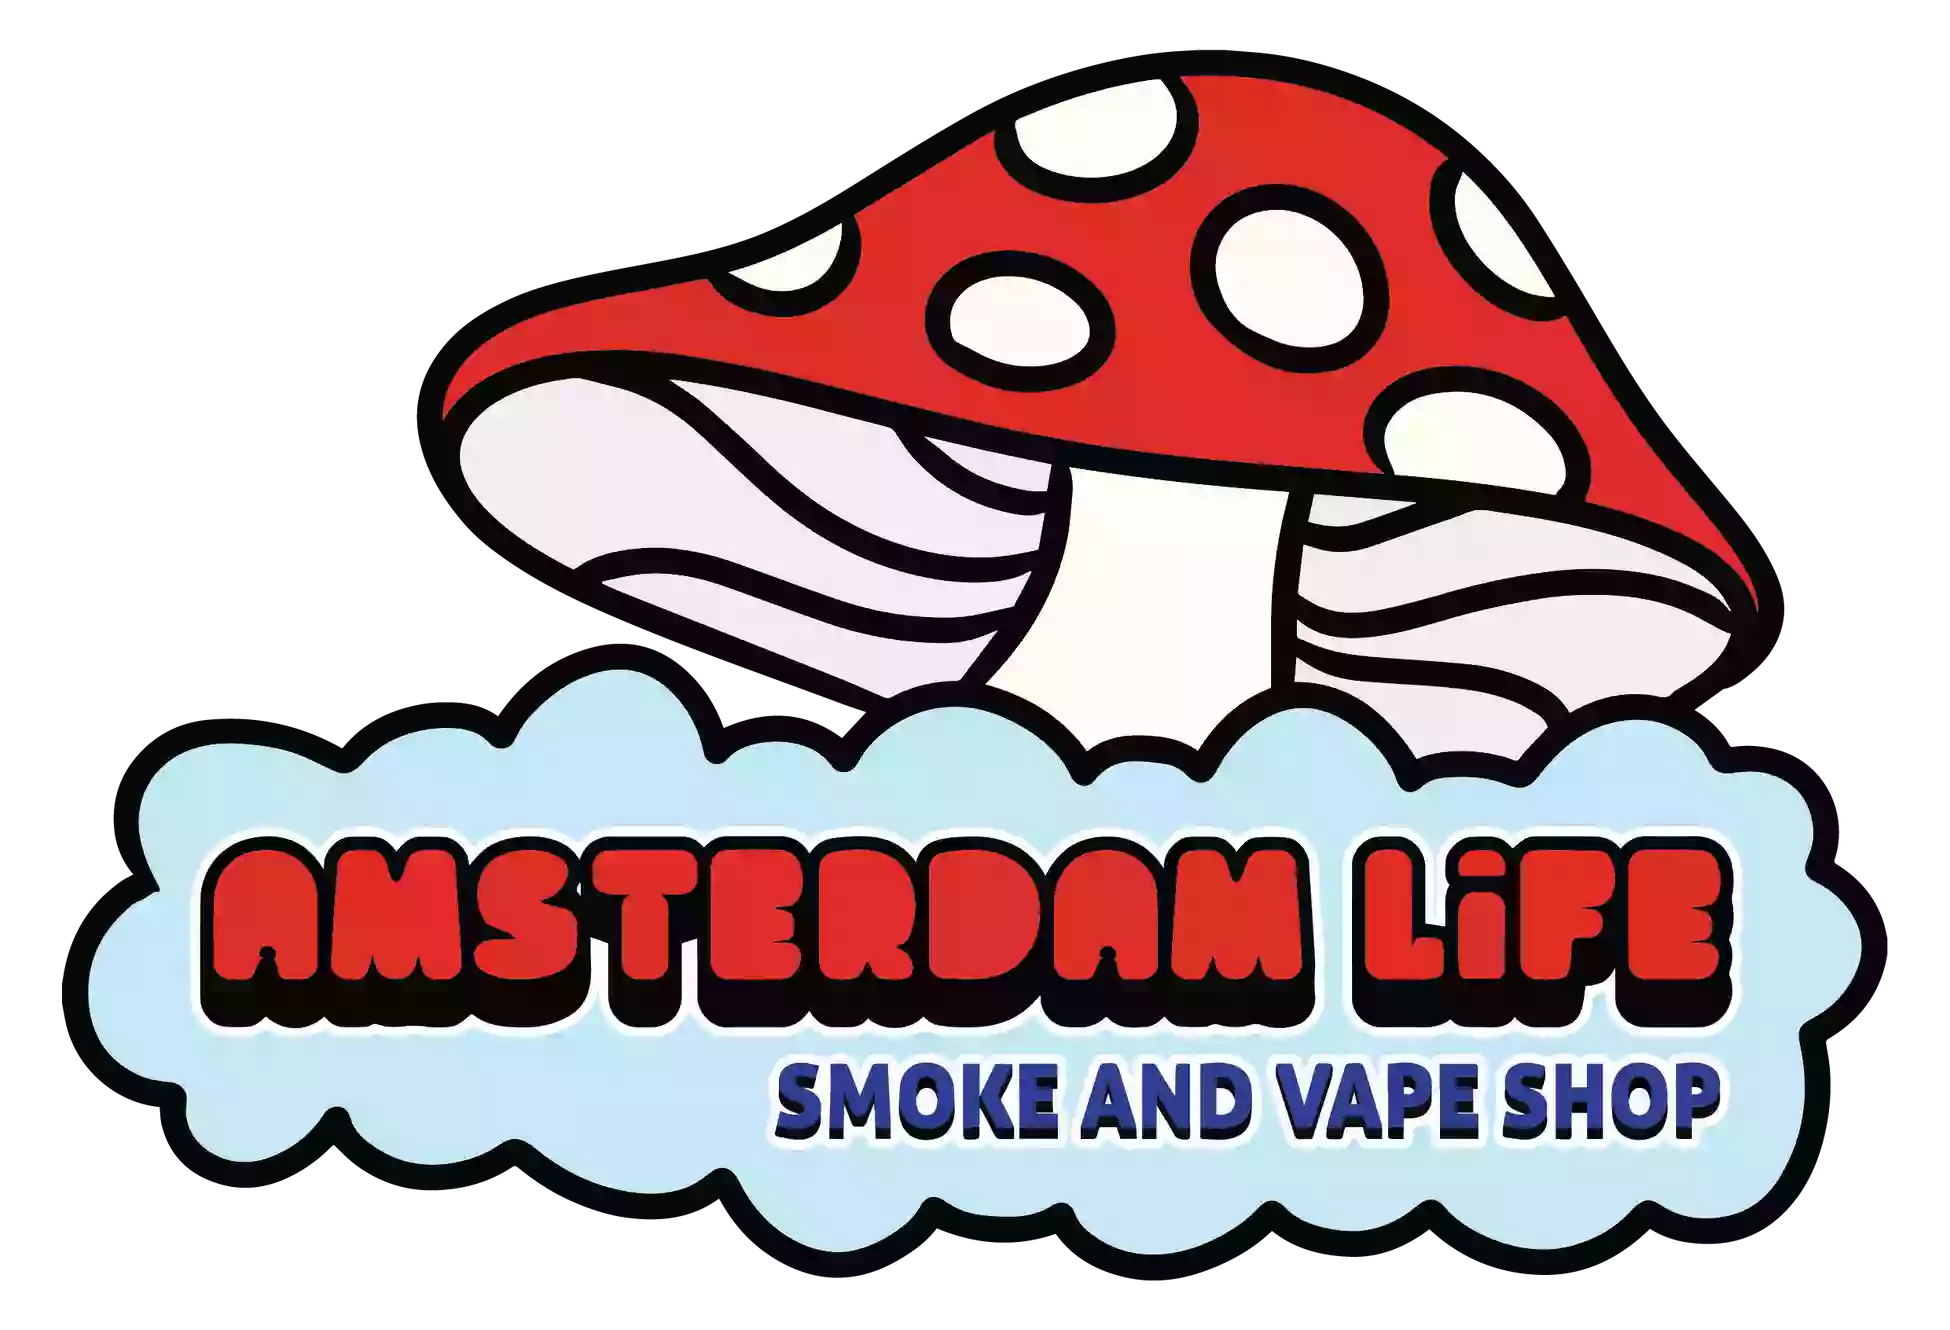 Amsterdam Life